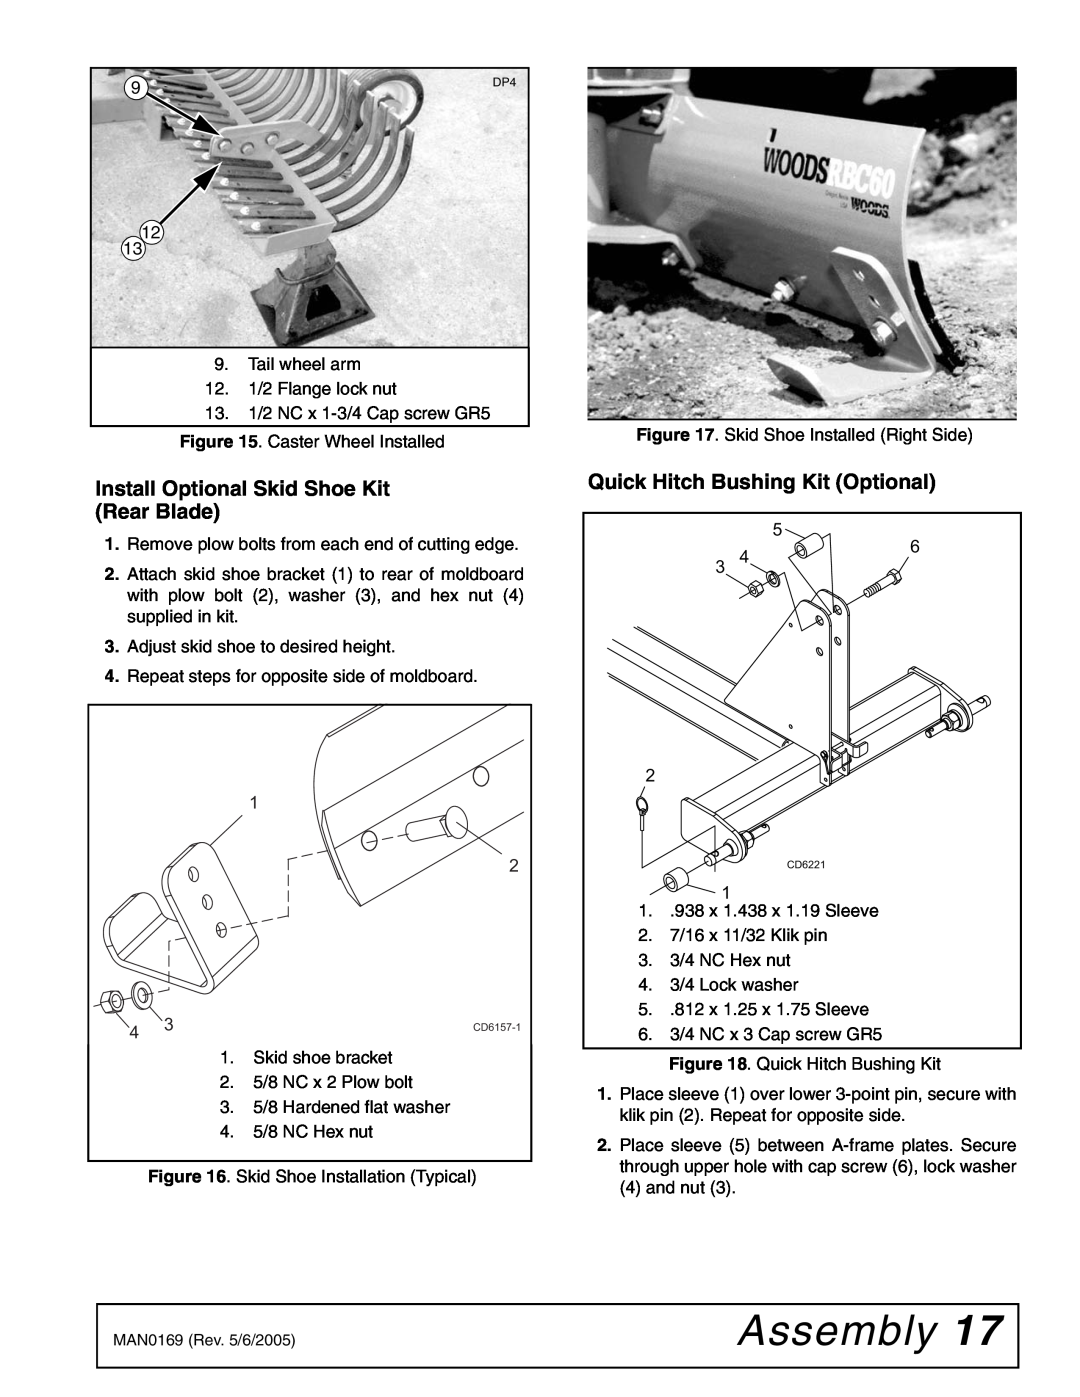 Woods Equipment RBC60 LRC60 manual Install Optional Skid Shoe Kit Rear Blade, Quick Hitch Bushing Kit Optional, Assembly 